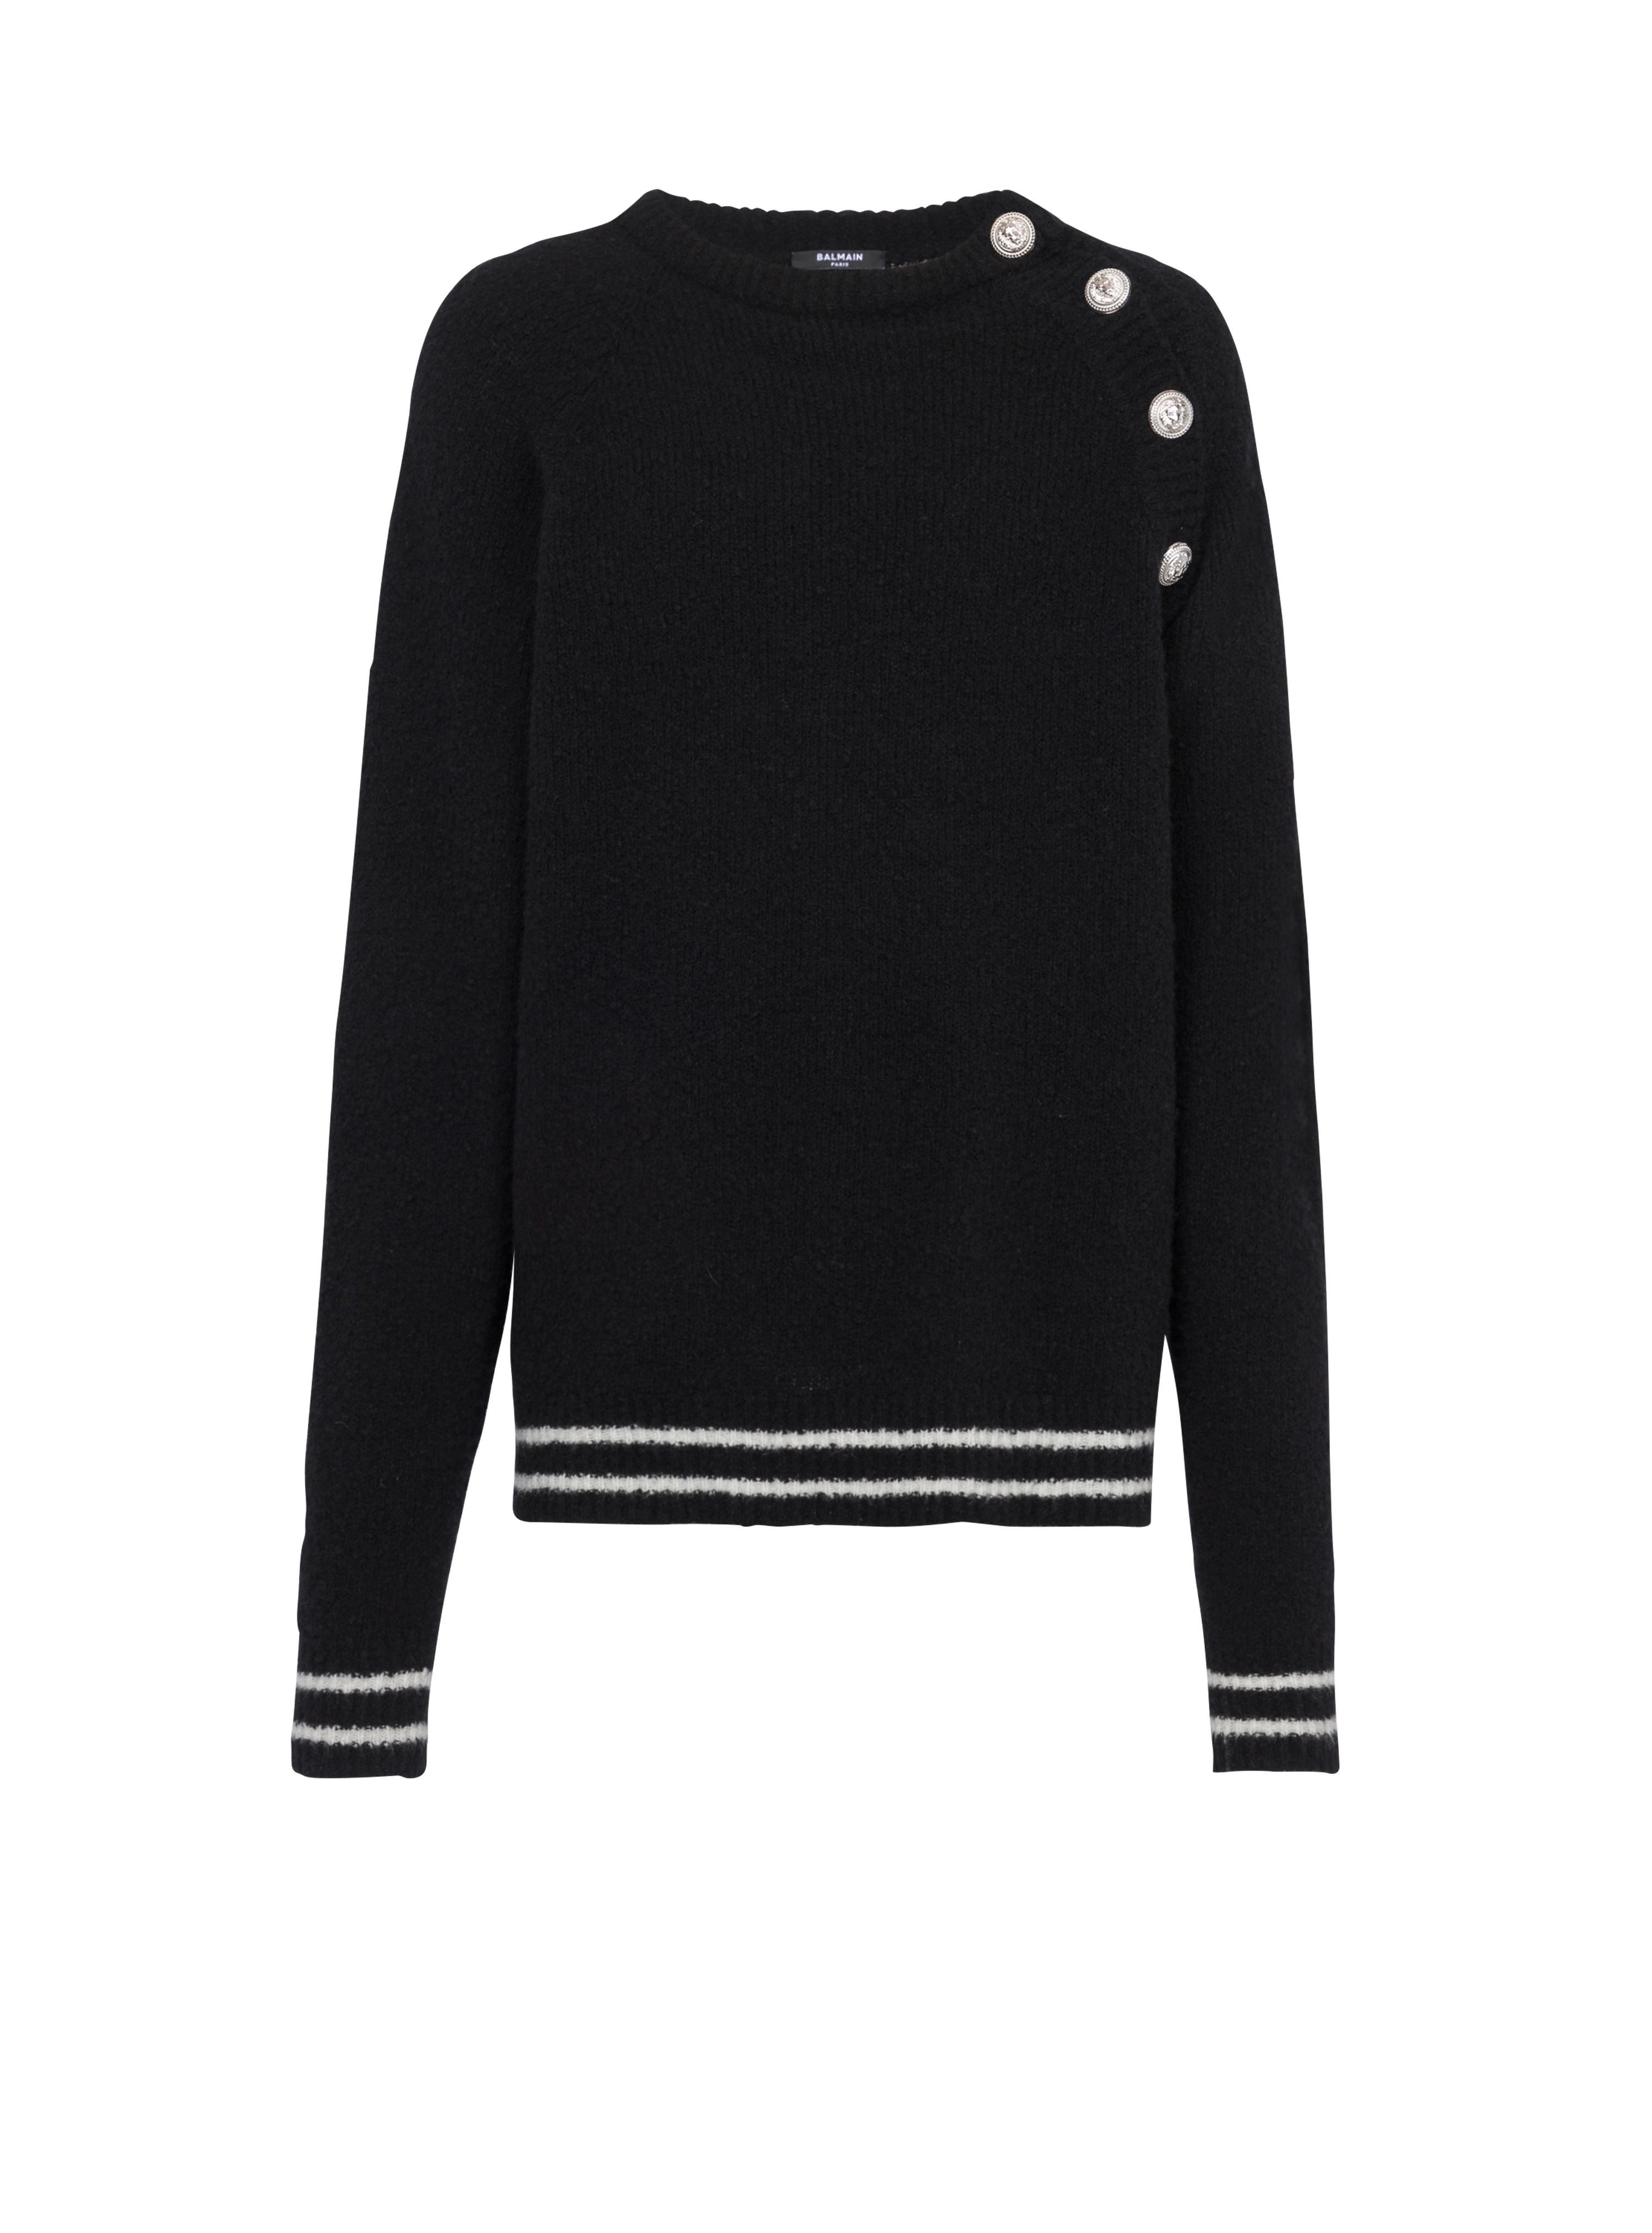 Cashmere sweater, black